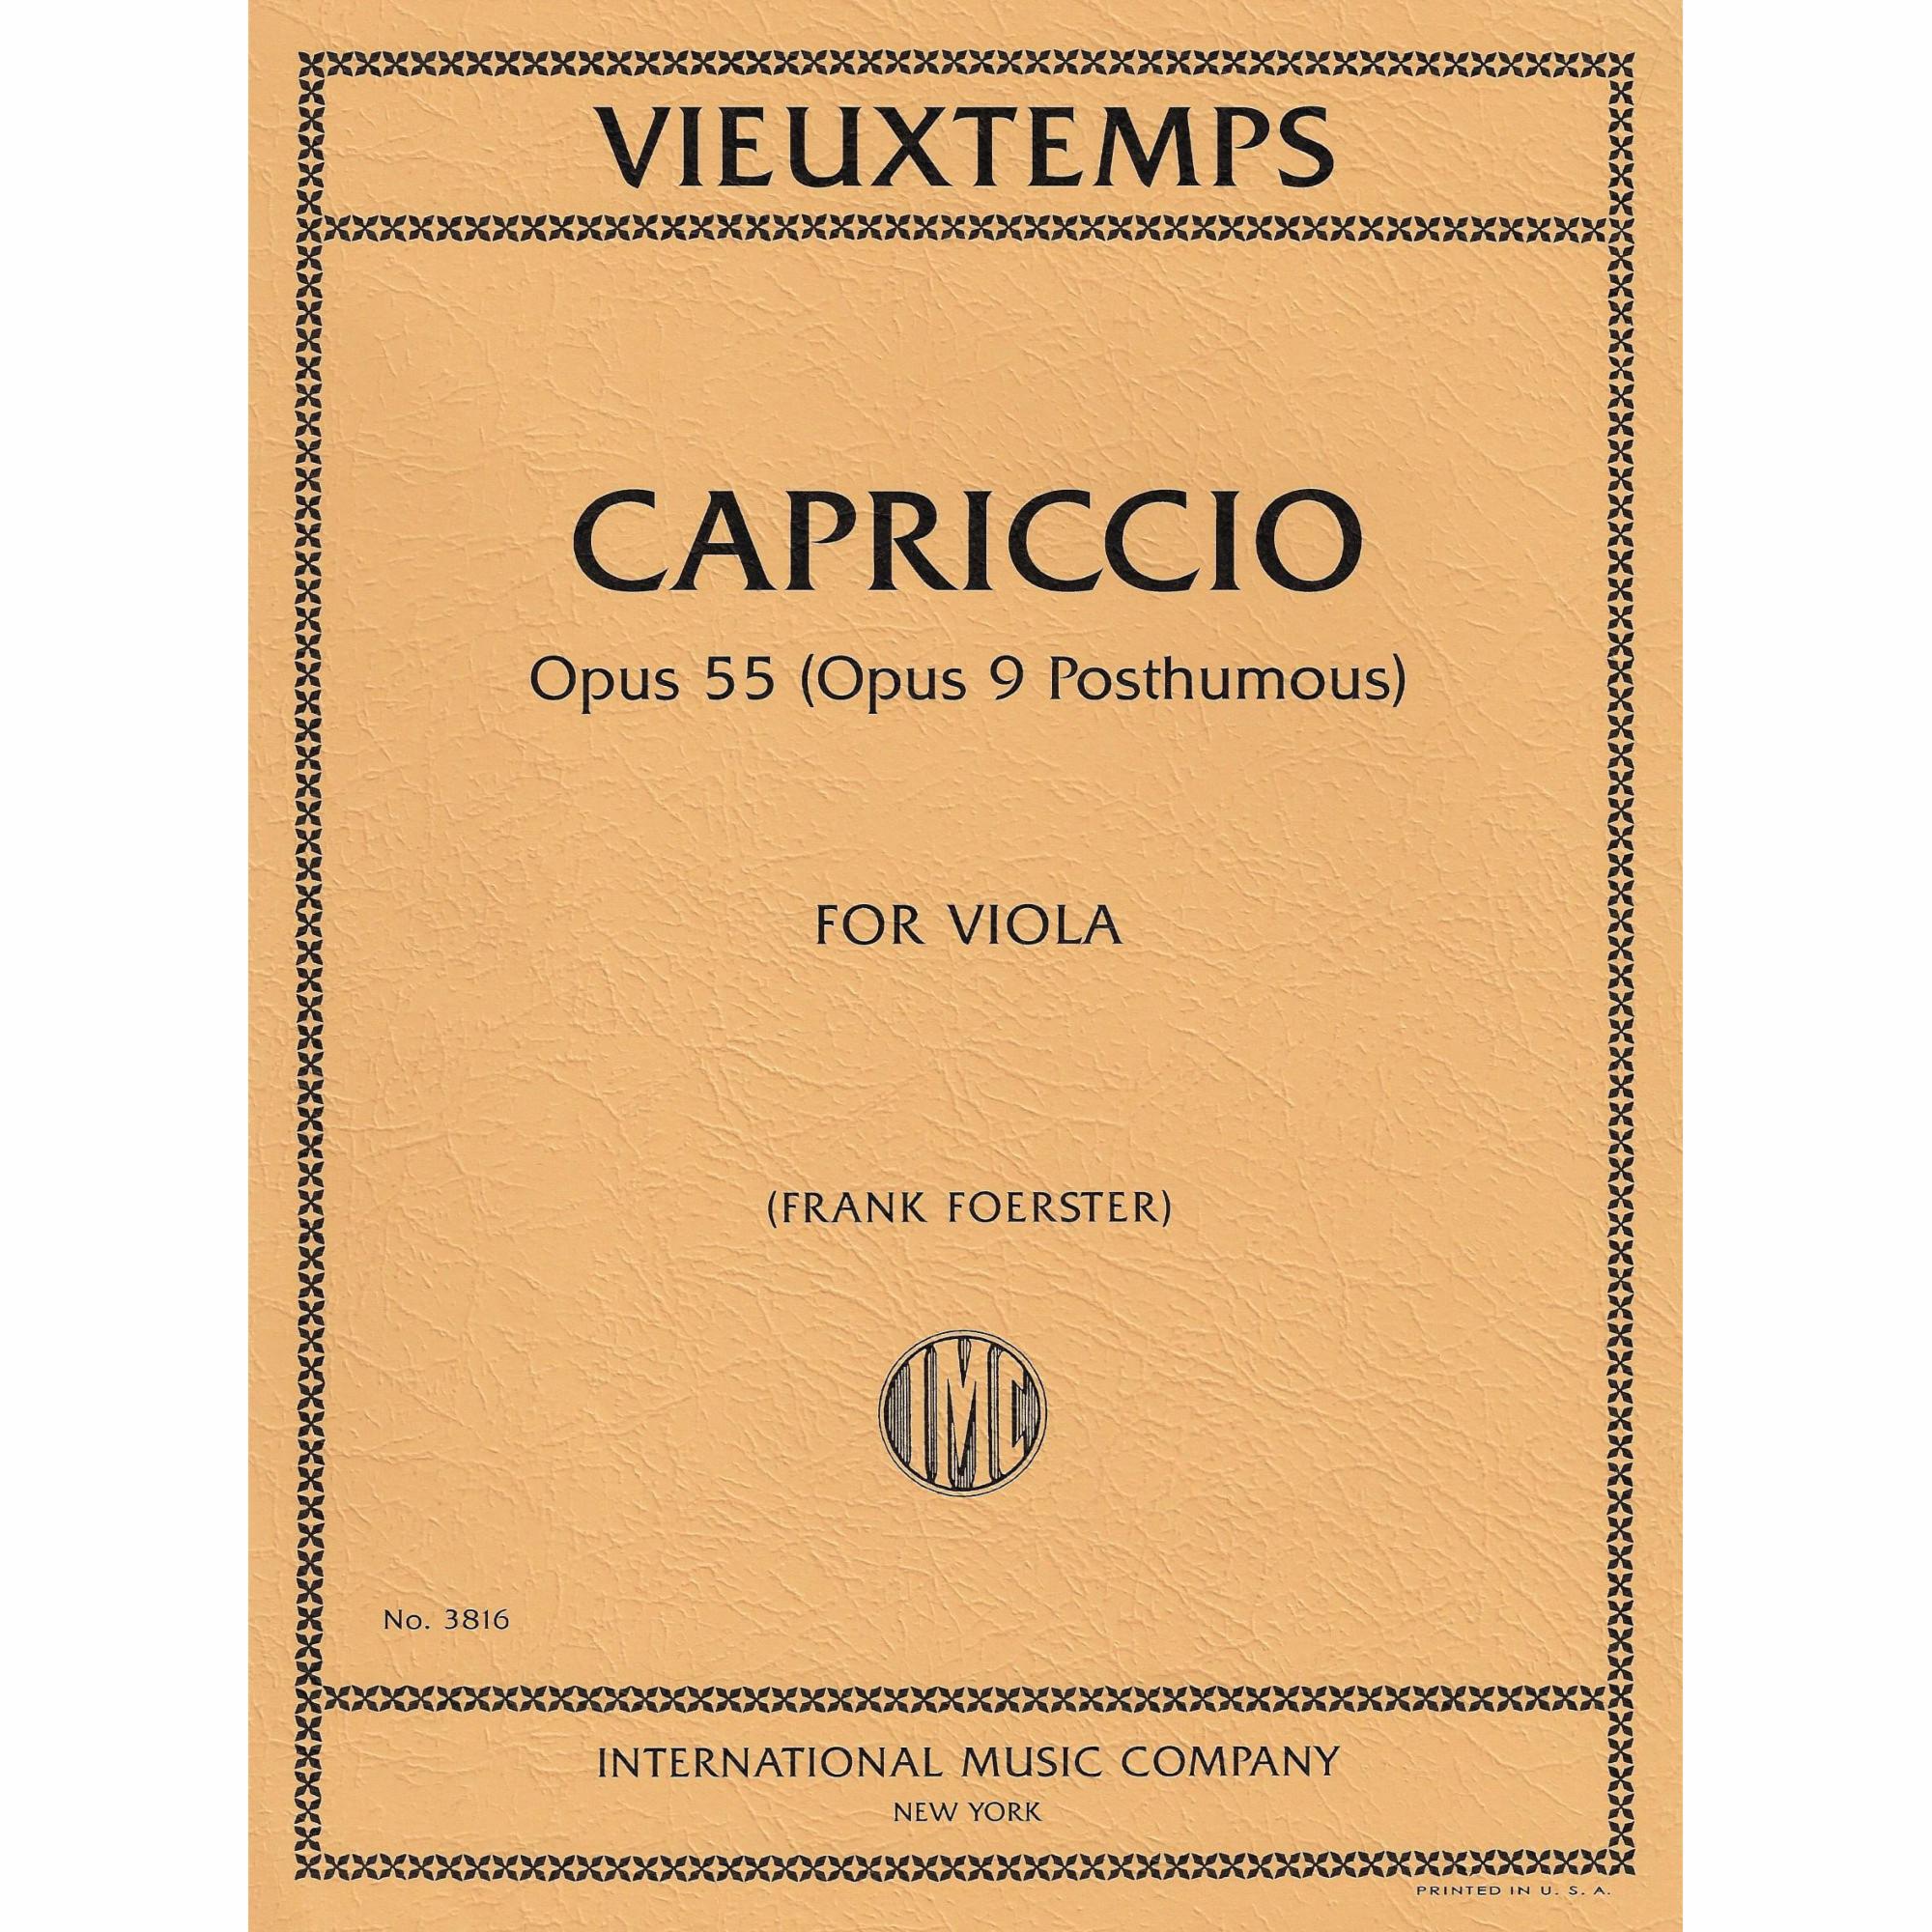 Vieuxtemps -- Capriccio, Op. 55 for Solo Viola